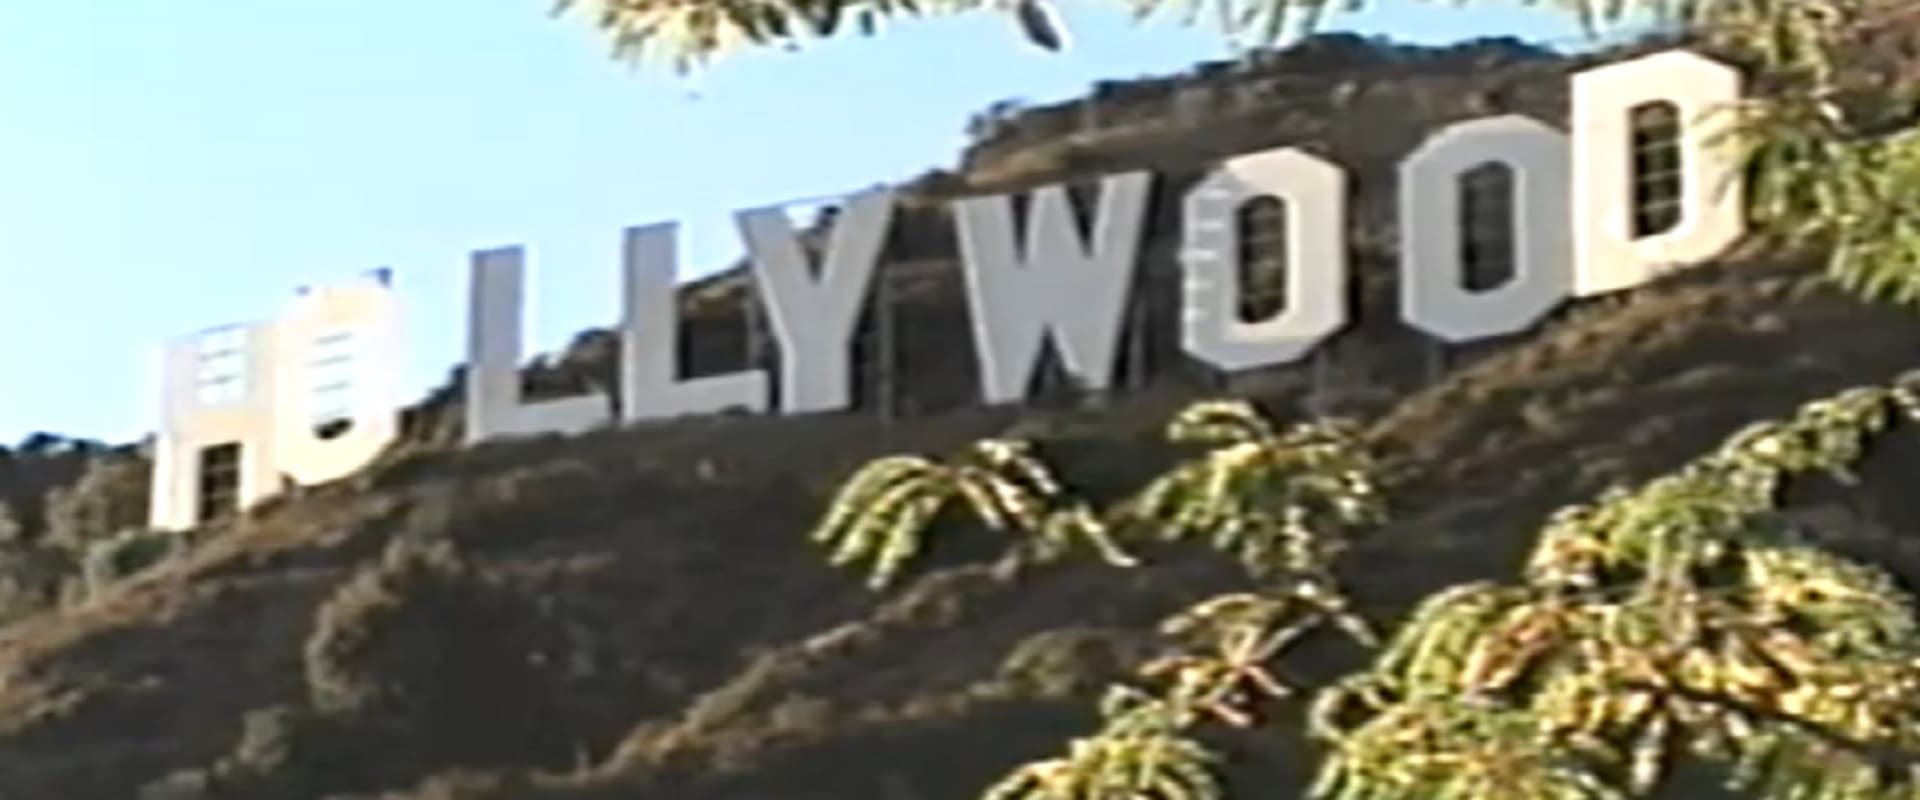 Hollywood Haunts